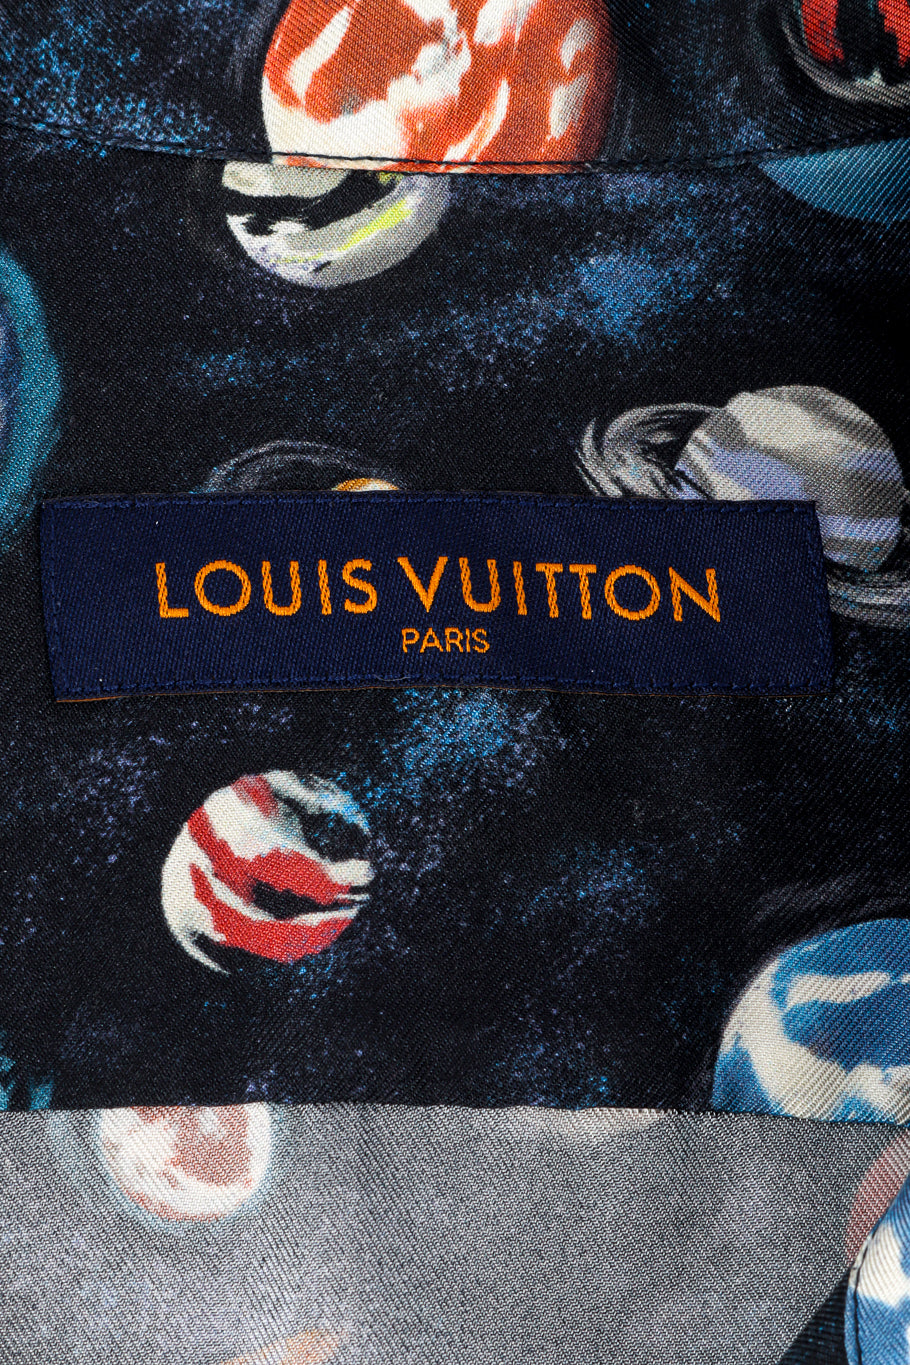 Louis Vuitton Galaxy Button Down signature label @recess la